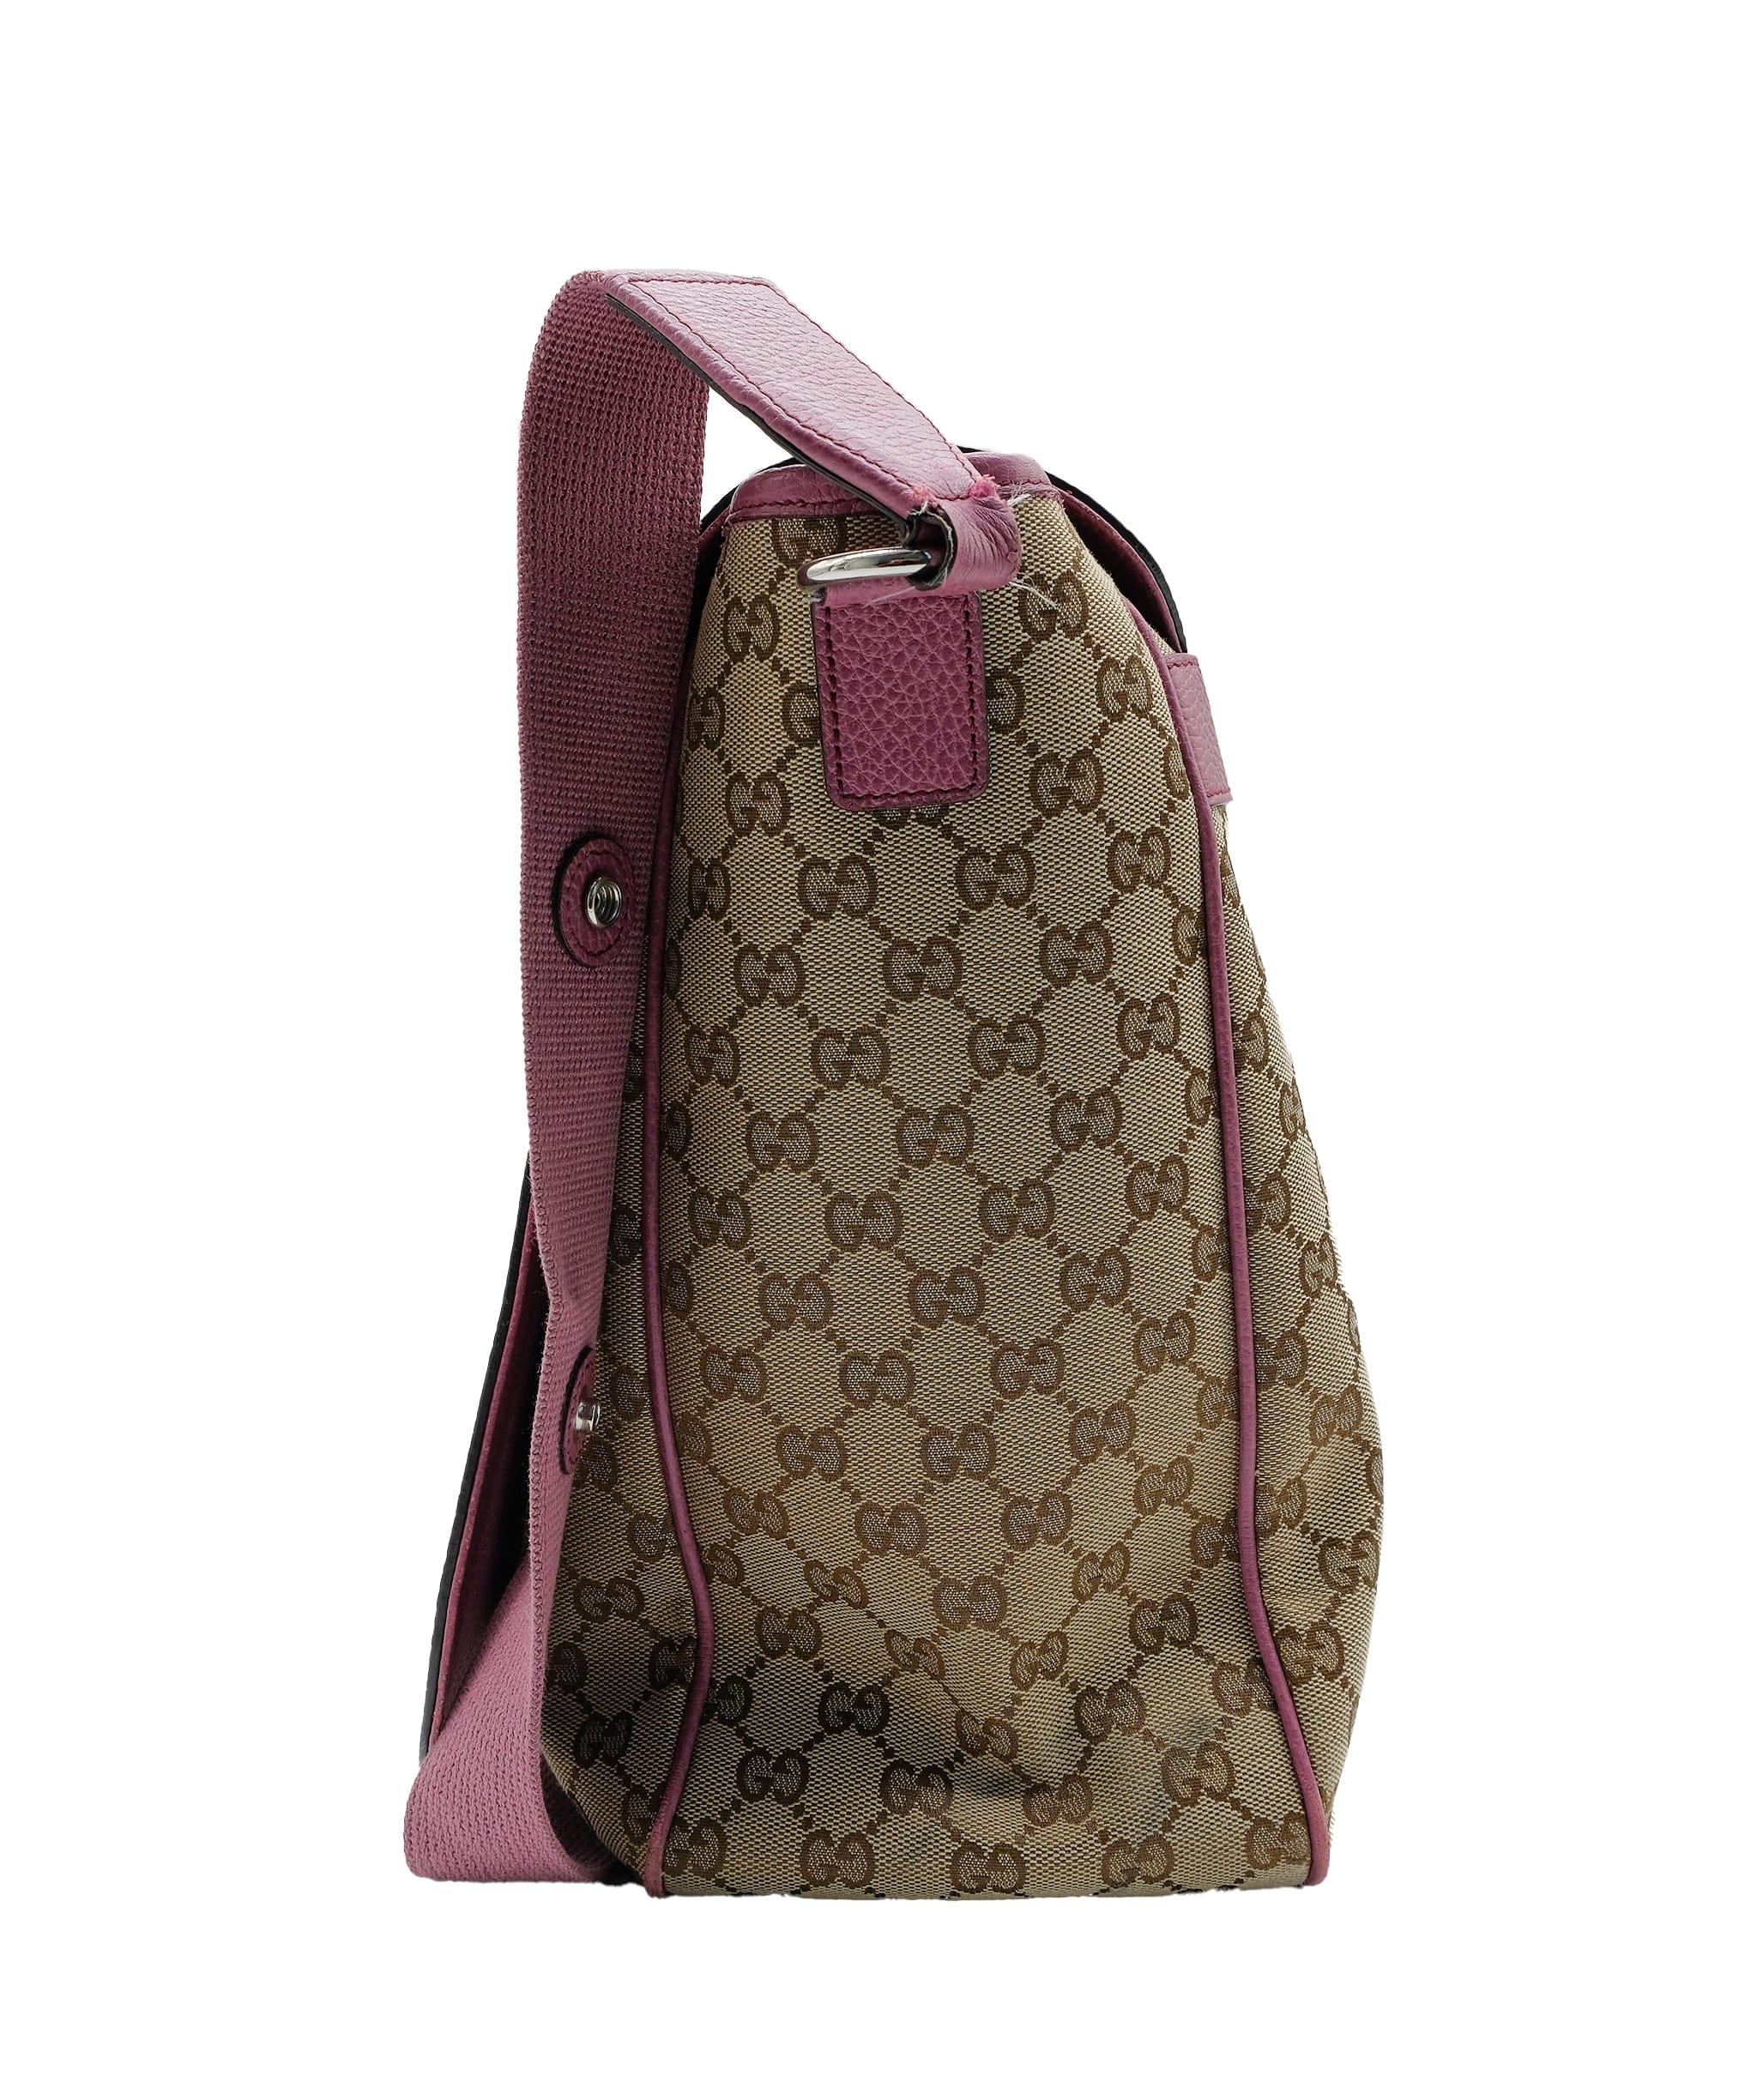 Gucci Gucci Baby Bag Pink RJC2257